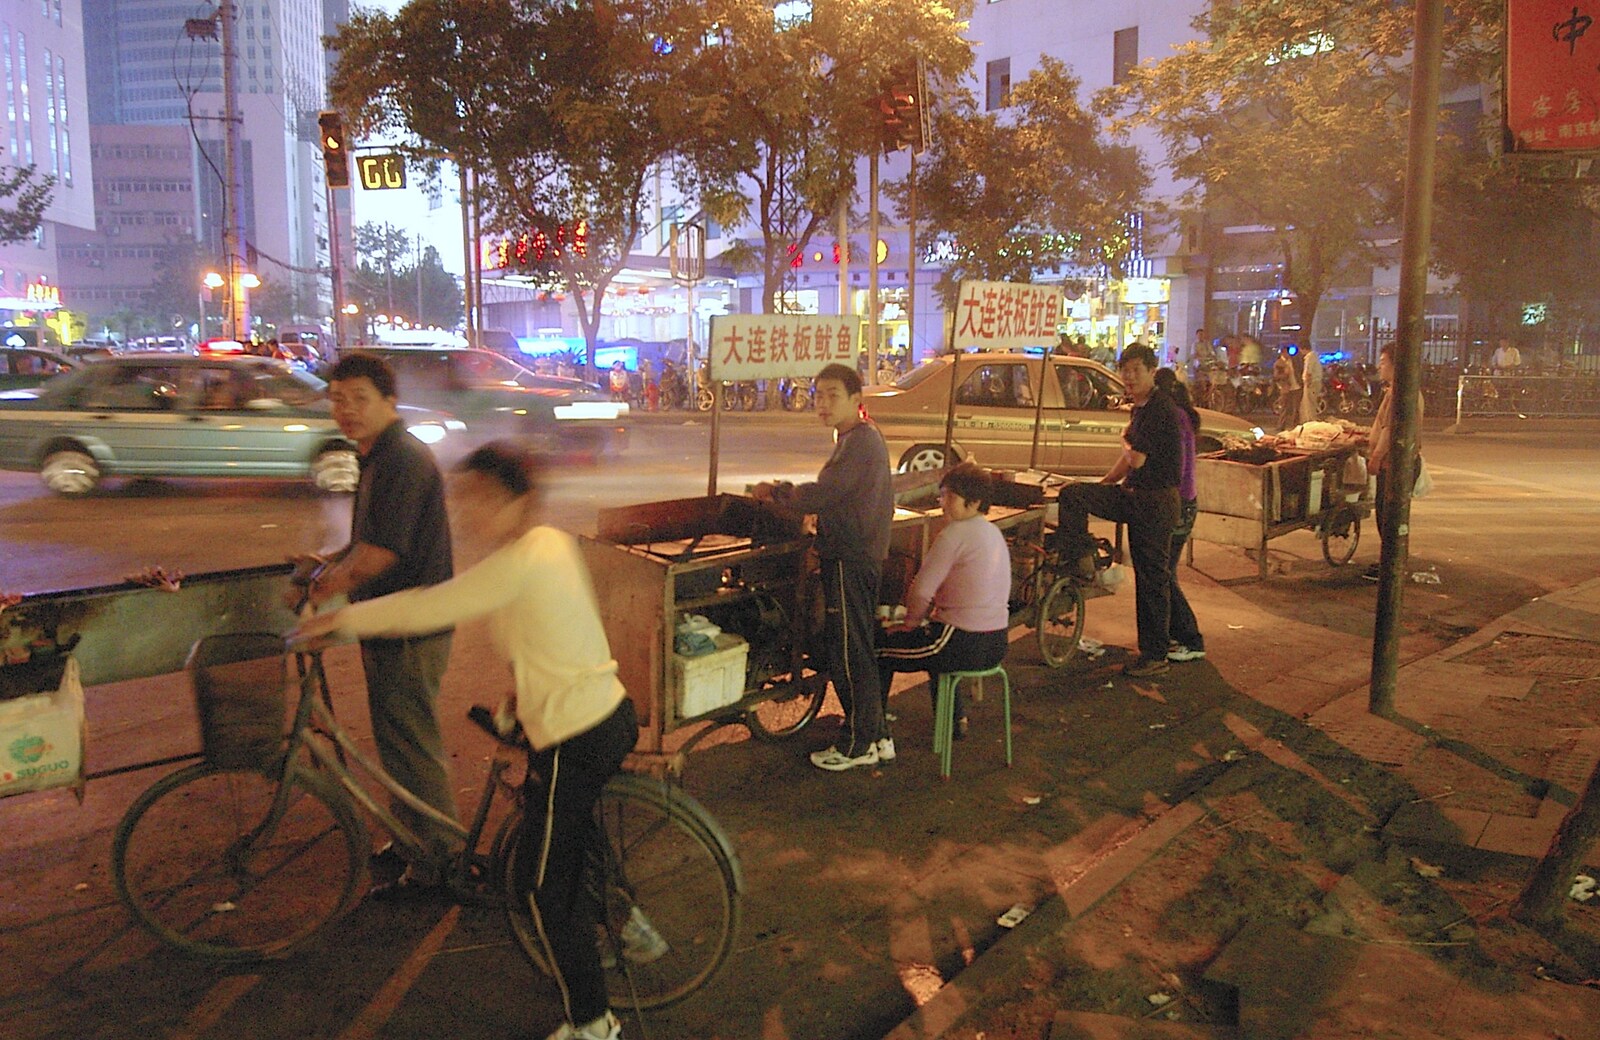 Bicycles and street food from Nanjing by Night, Nanjing, Jiangsu Province, China - 4th October 2006